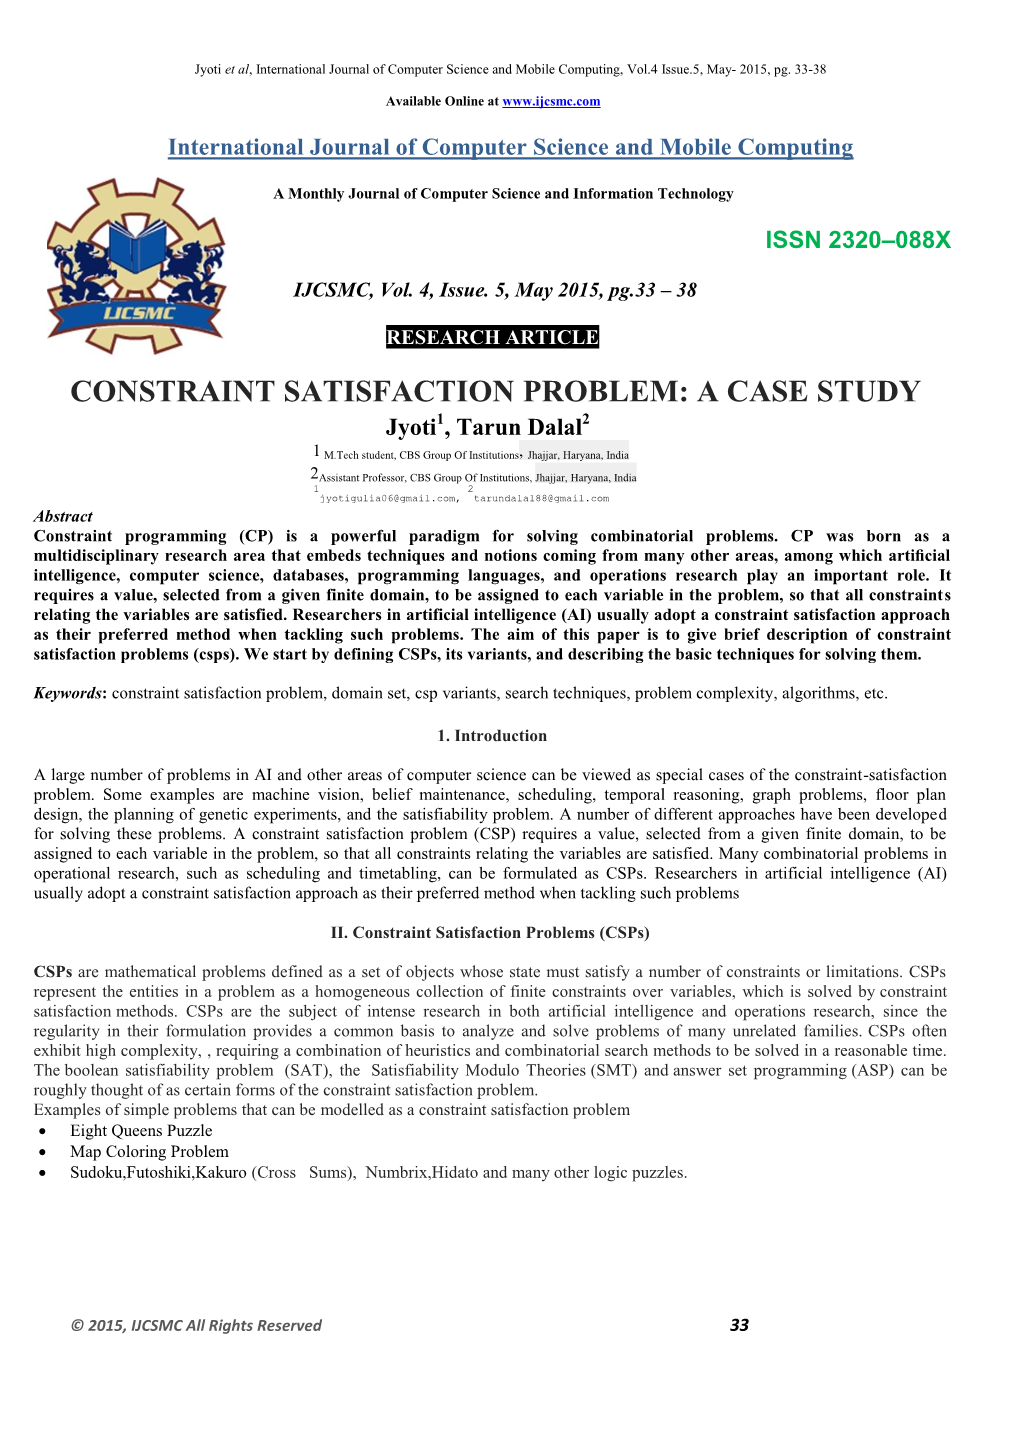 CONSTRAINT SATISFACTION PROBLEM: a CASE STUDY 1 2 Jyoti , Tarun Dalal